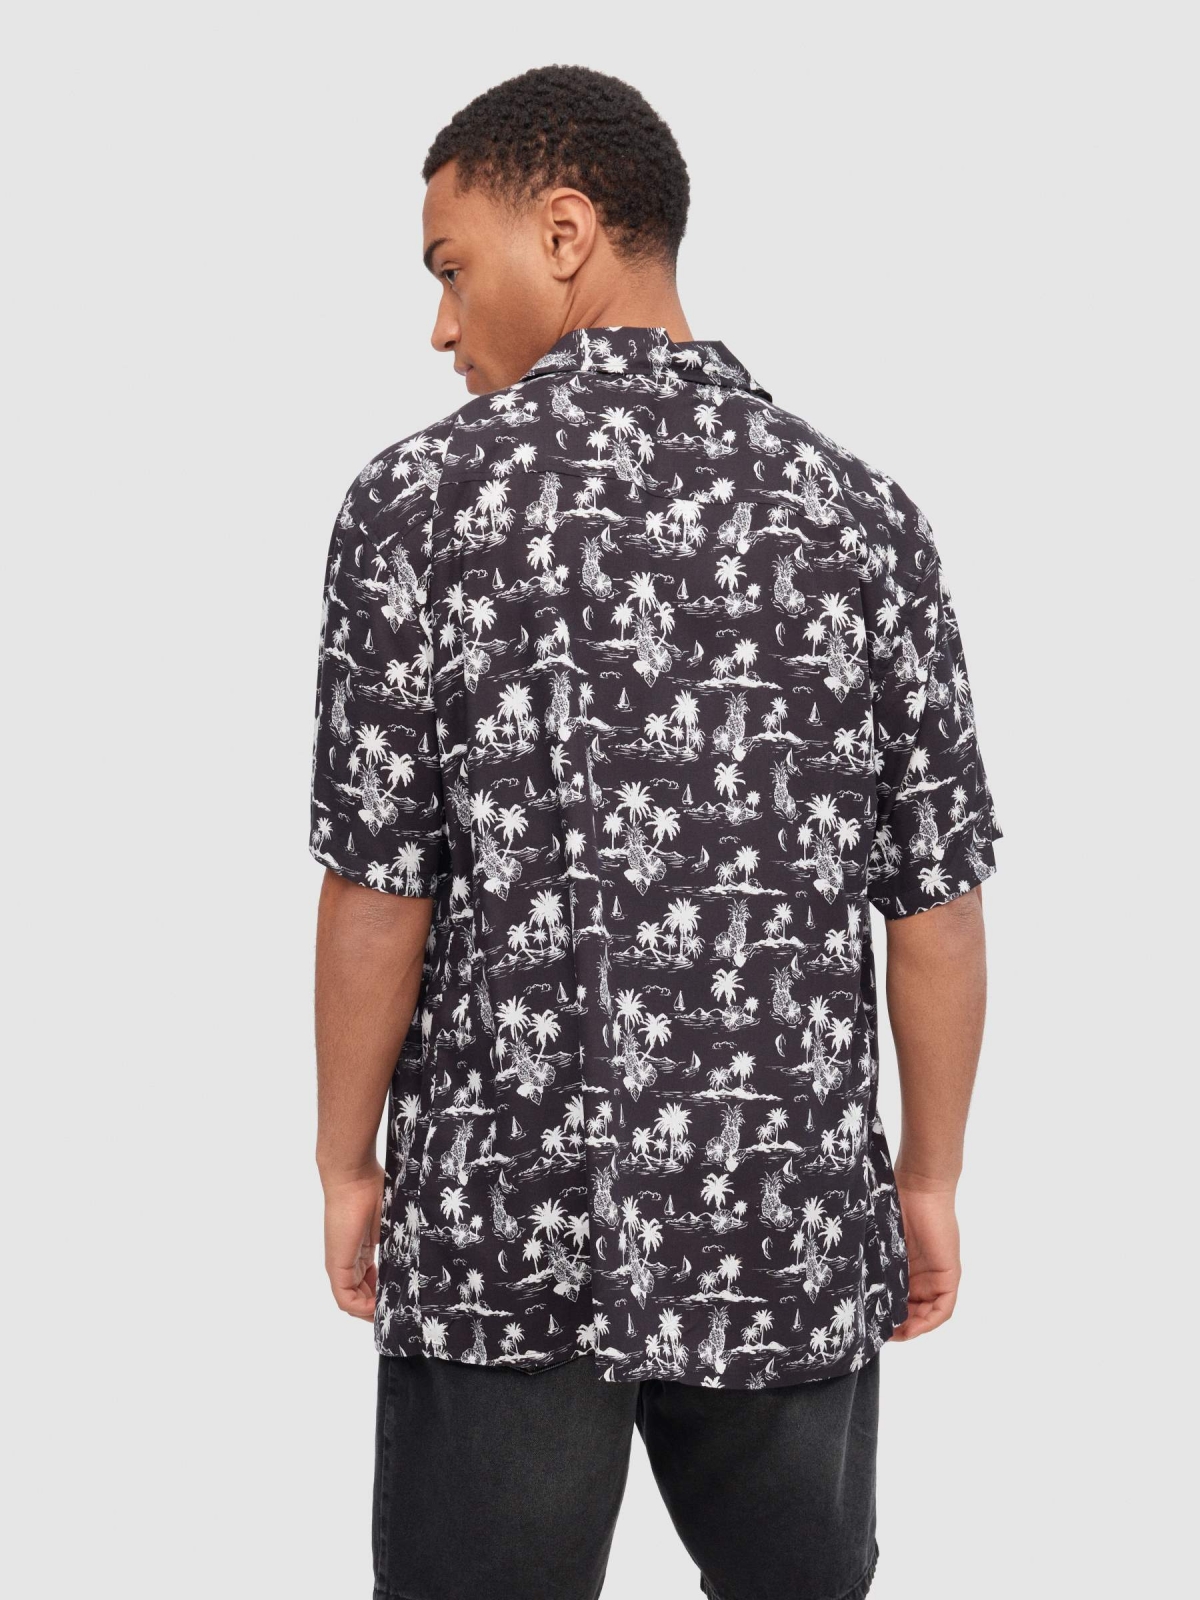 Camisa hawaiana preto vista meia traseira